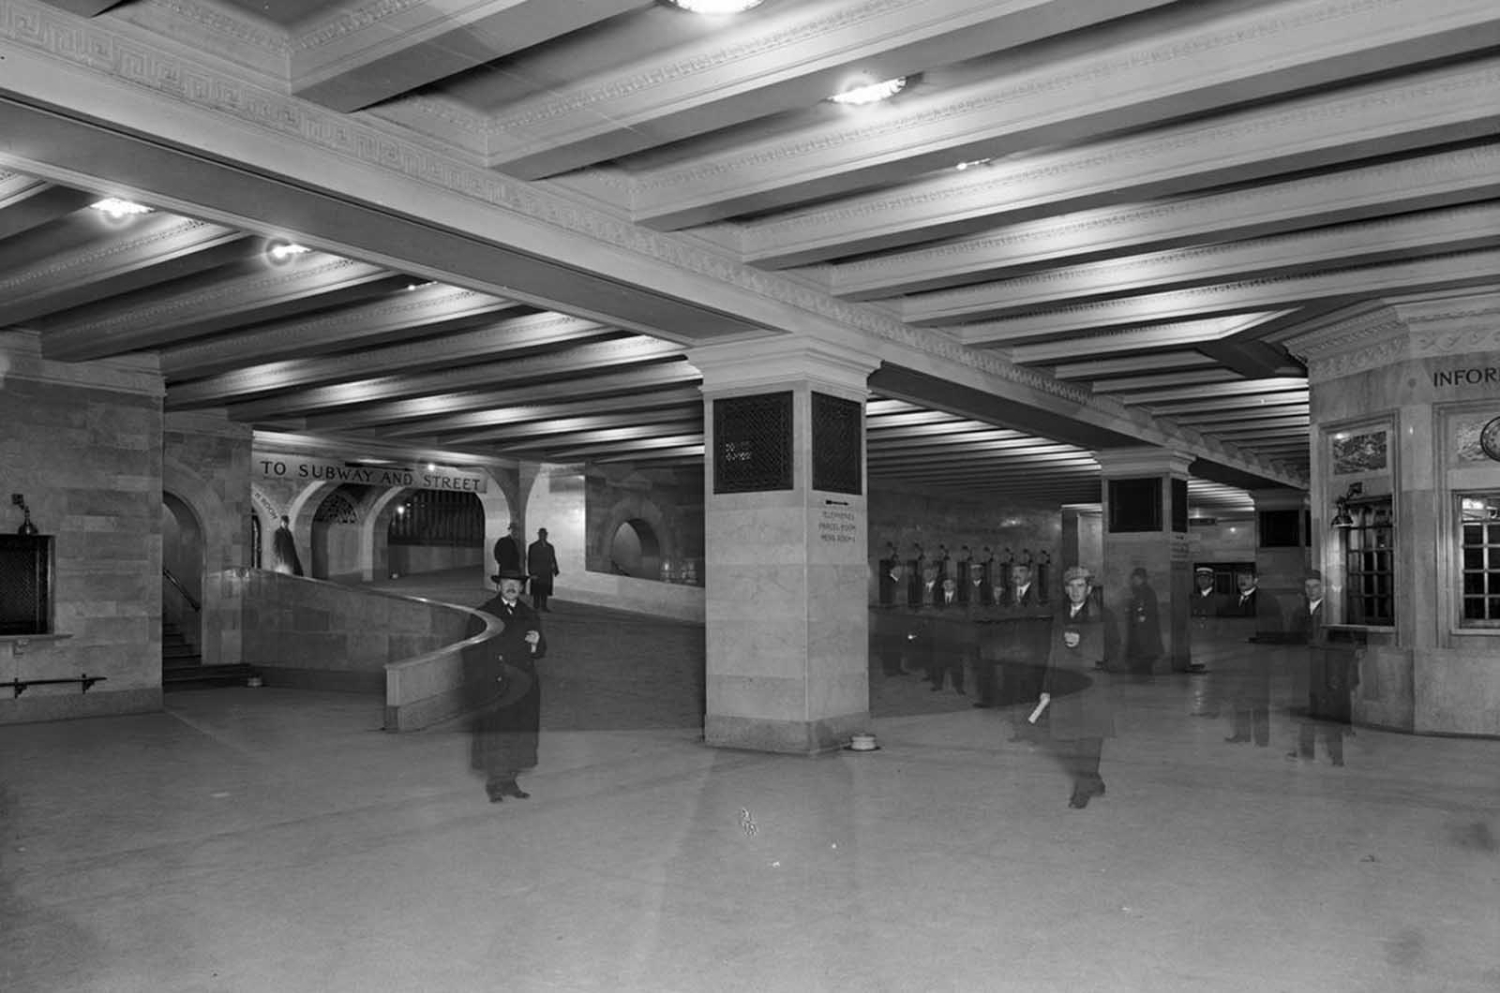 Приміський вестибюль з пандусами, вокзал Гранд Сентрал, близько 1912